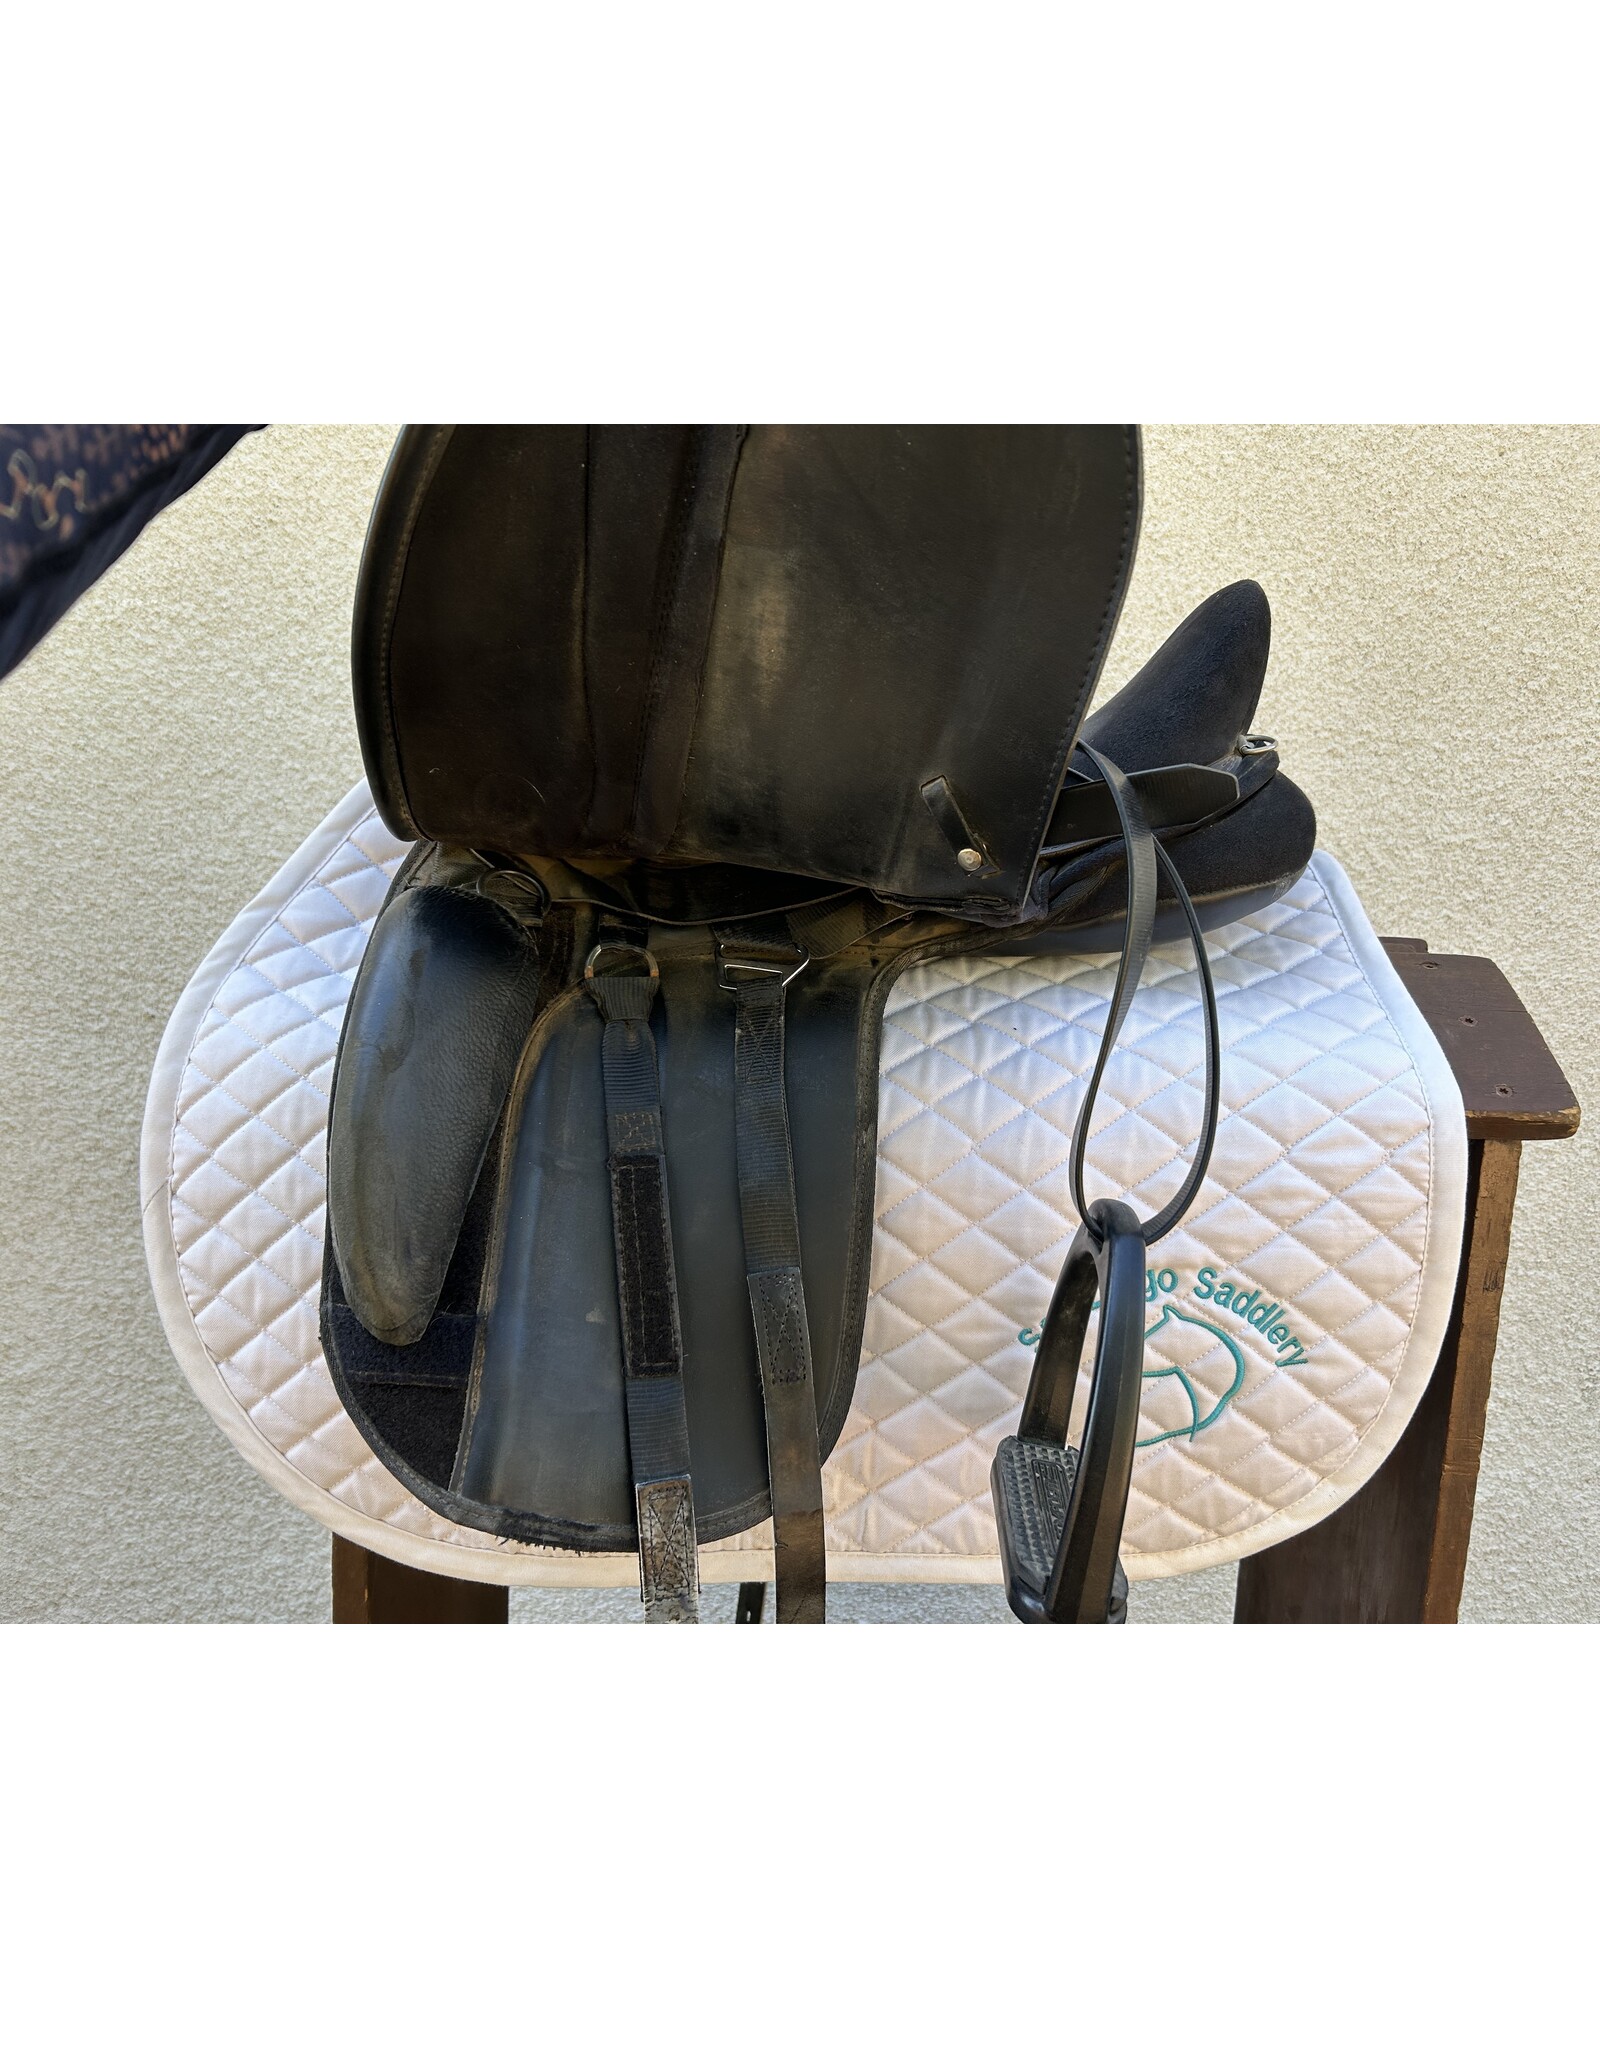 Thorowgood Dressage Saddle 17" Adjustable Gullet